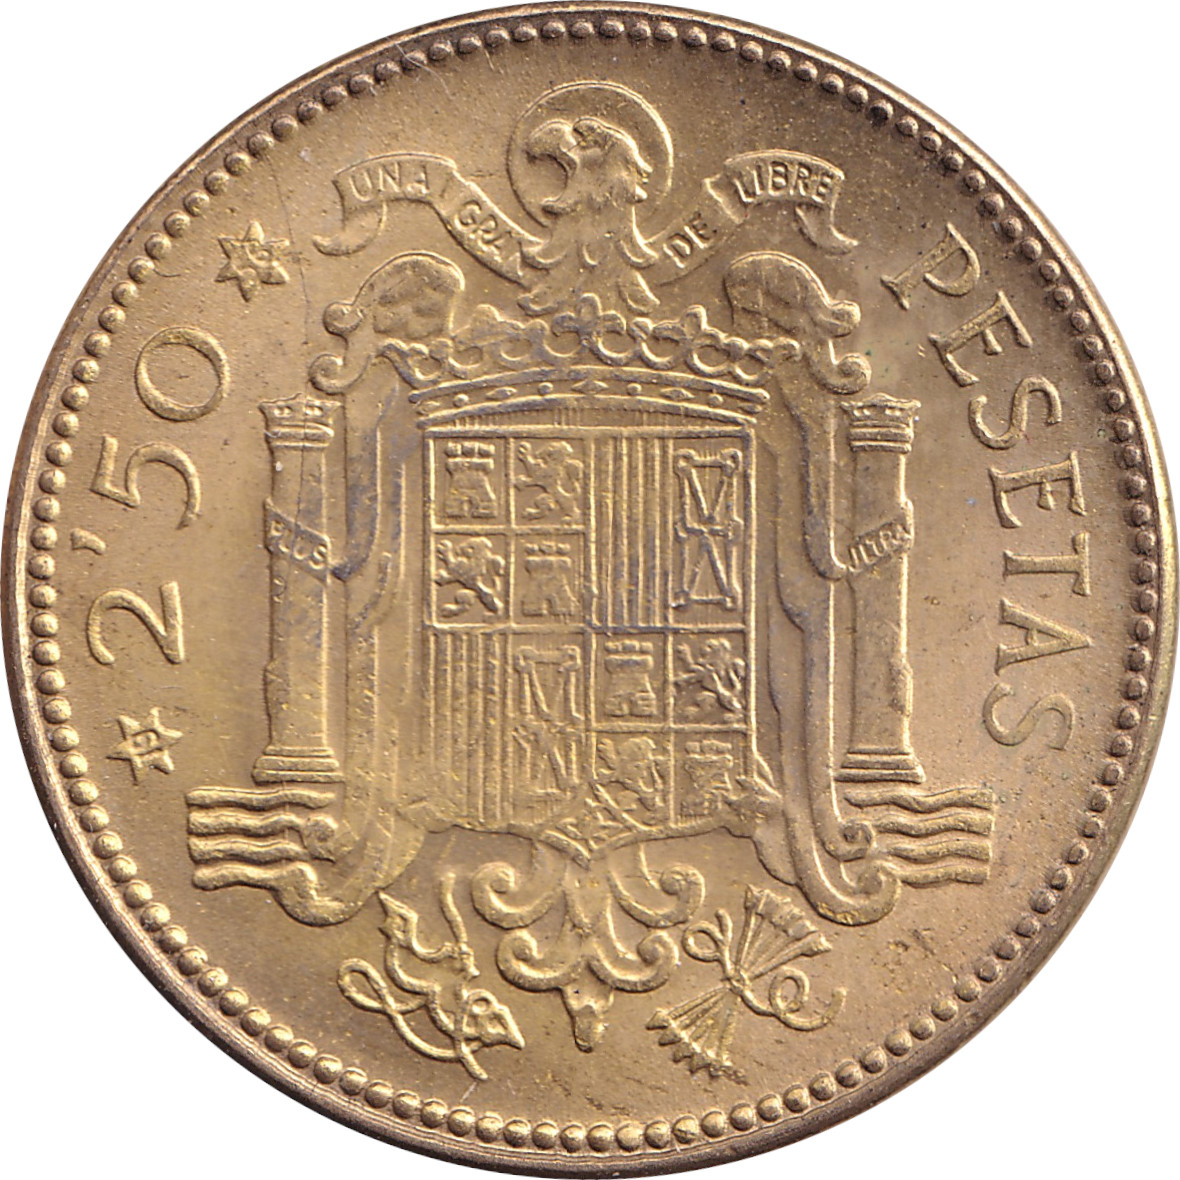 2 1/2 pesetas - Franco